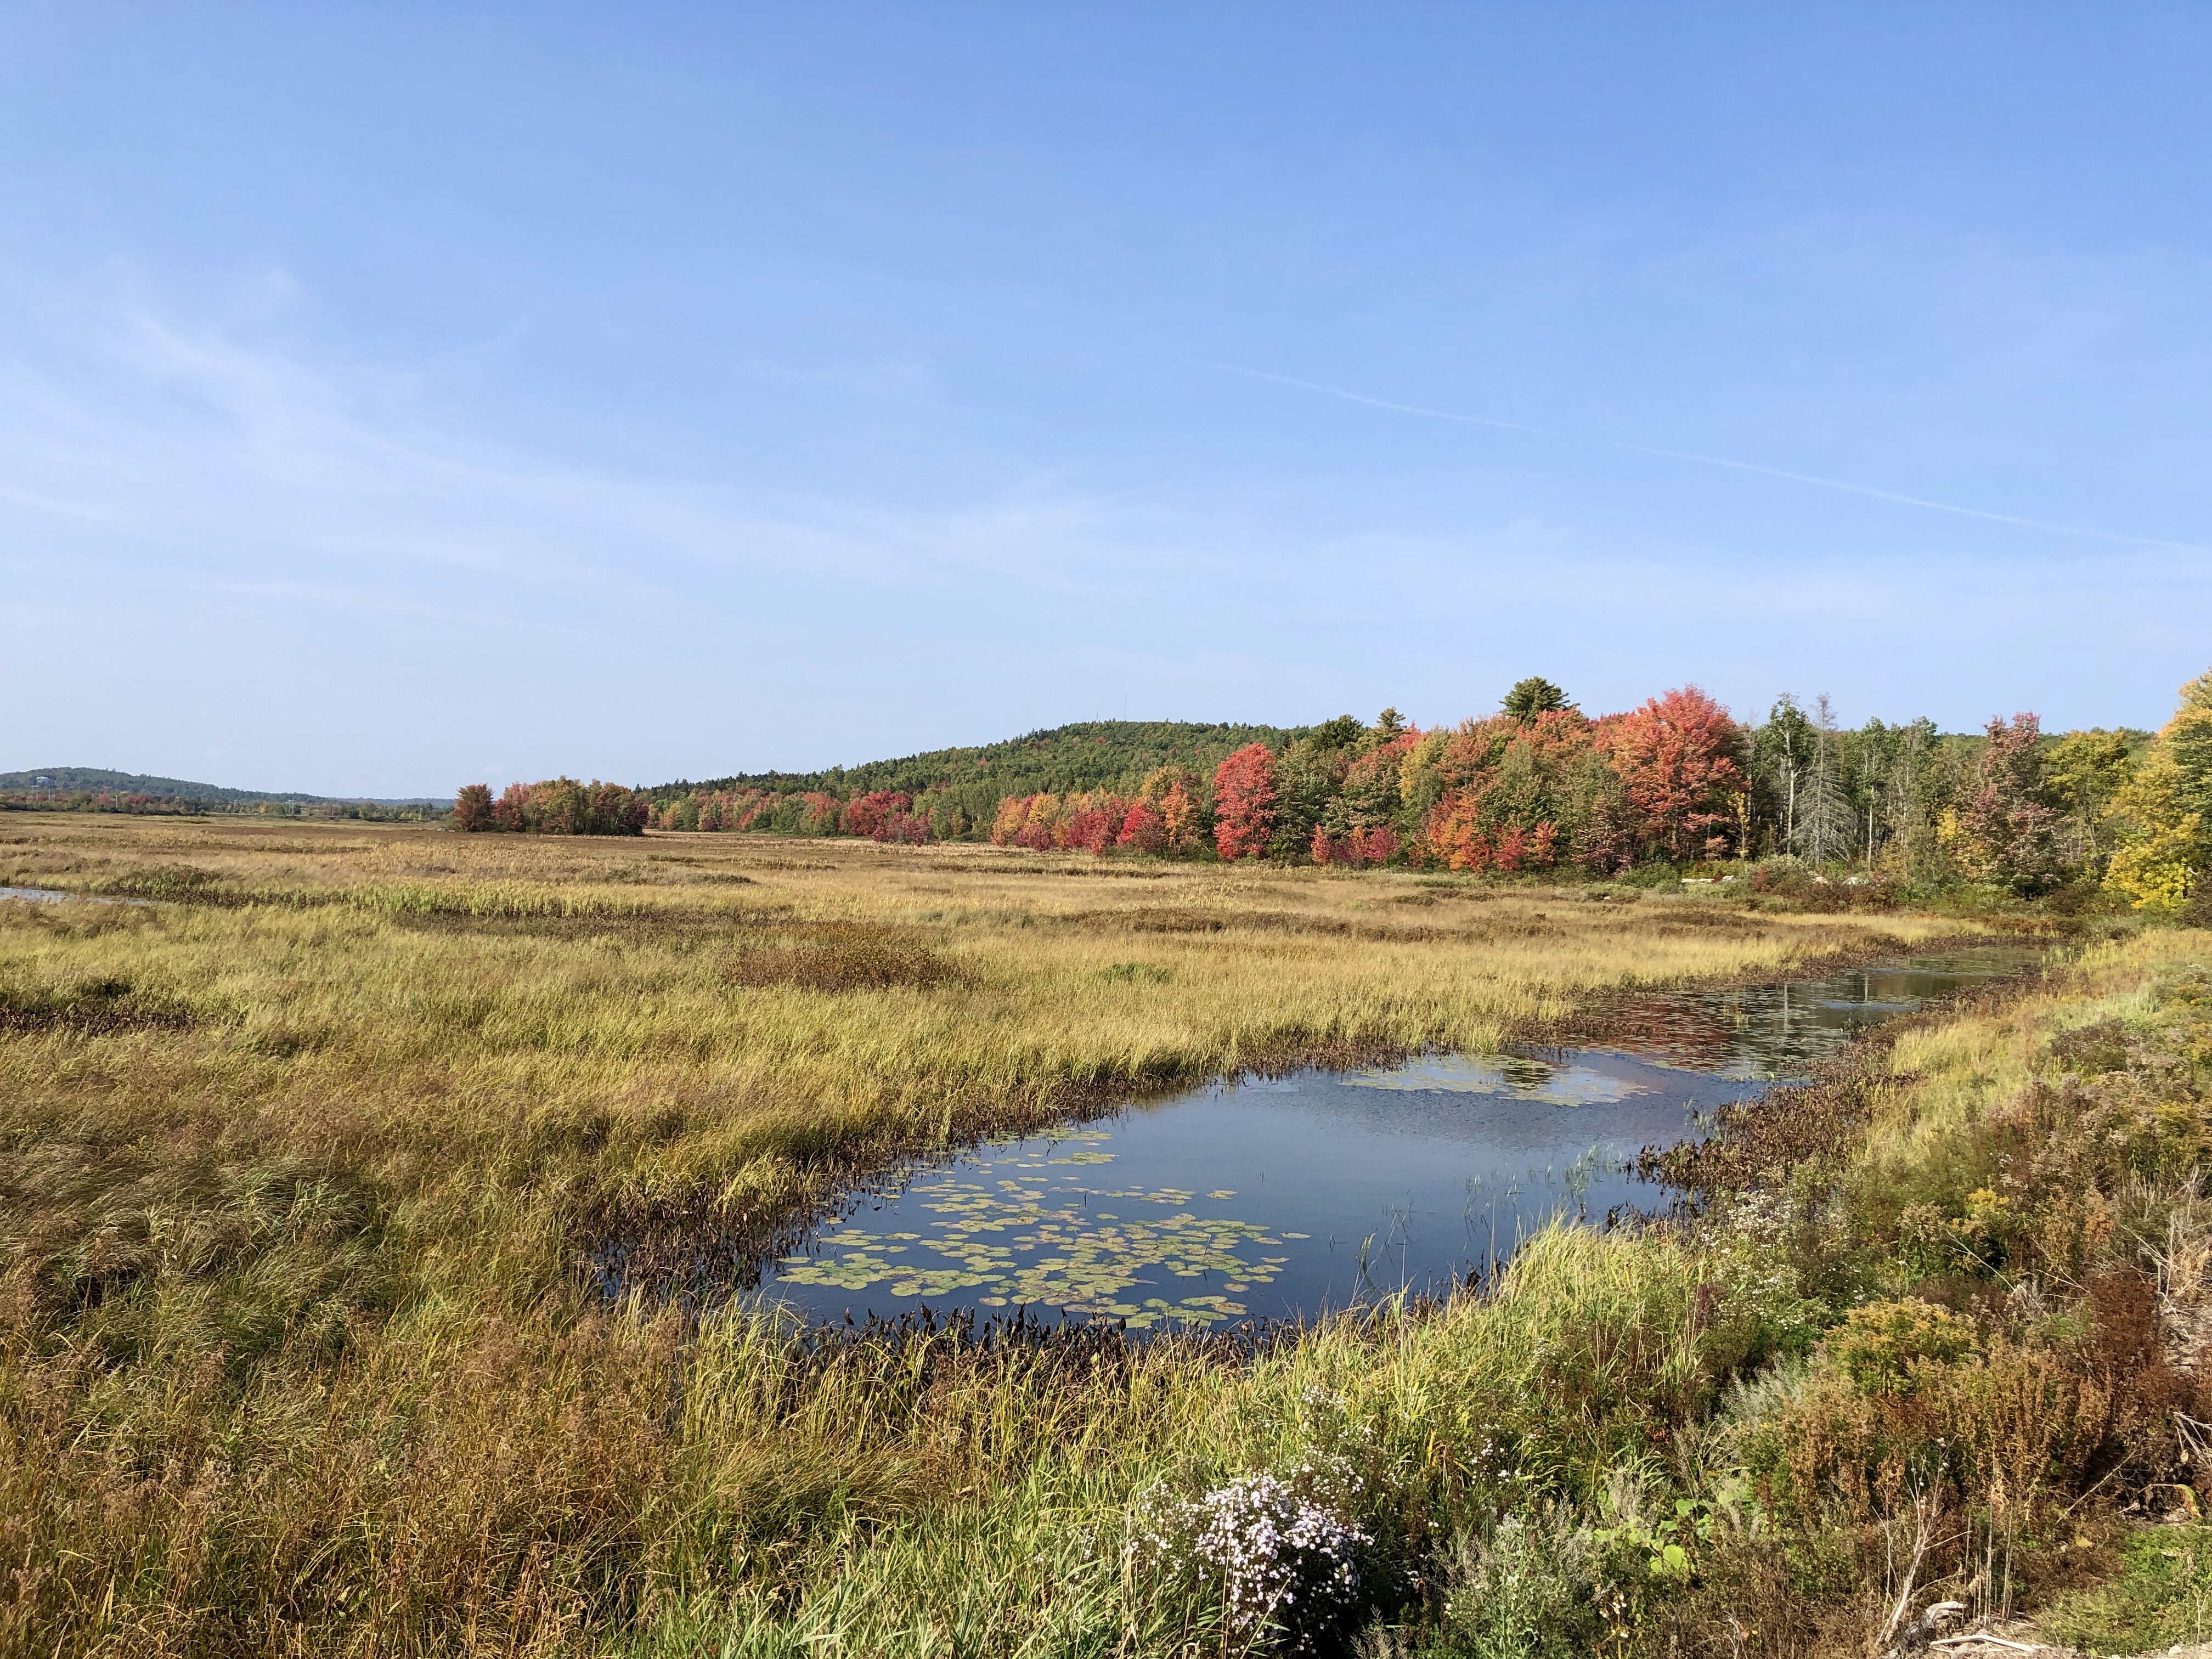 Autumn over wetland at Moosehorn National Wildlife Refuge in Maine